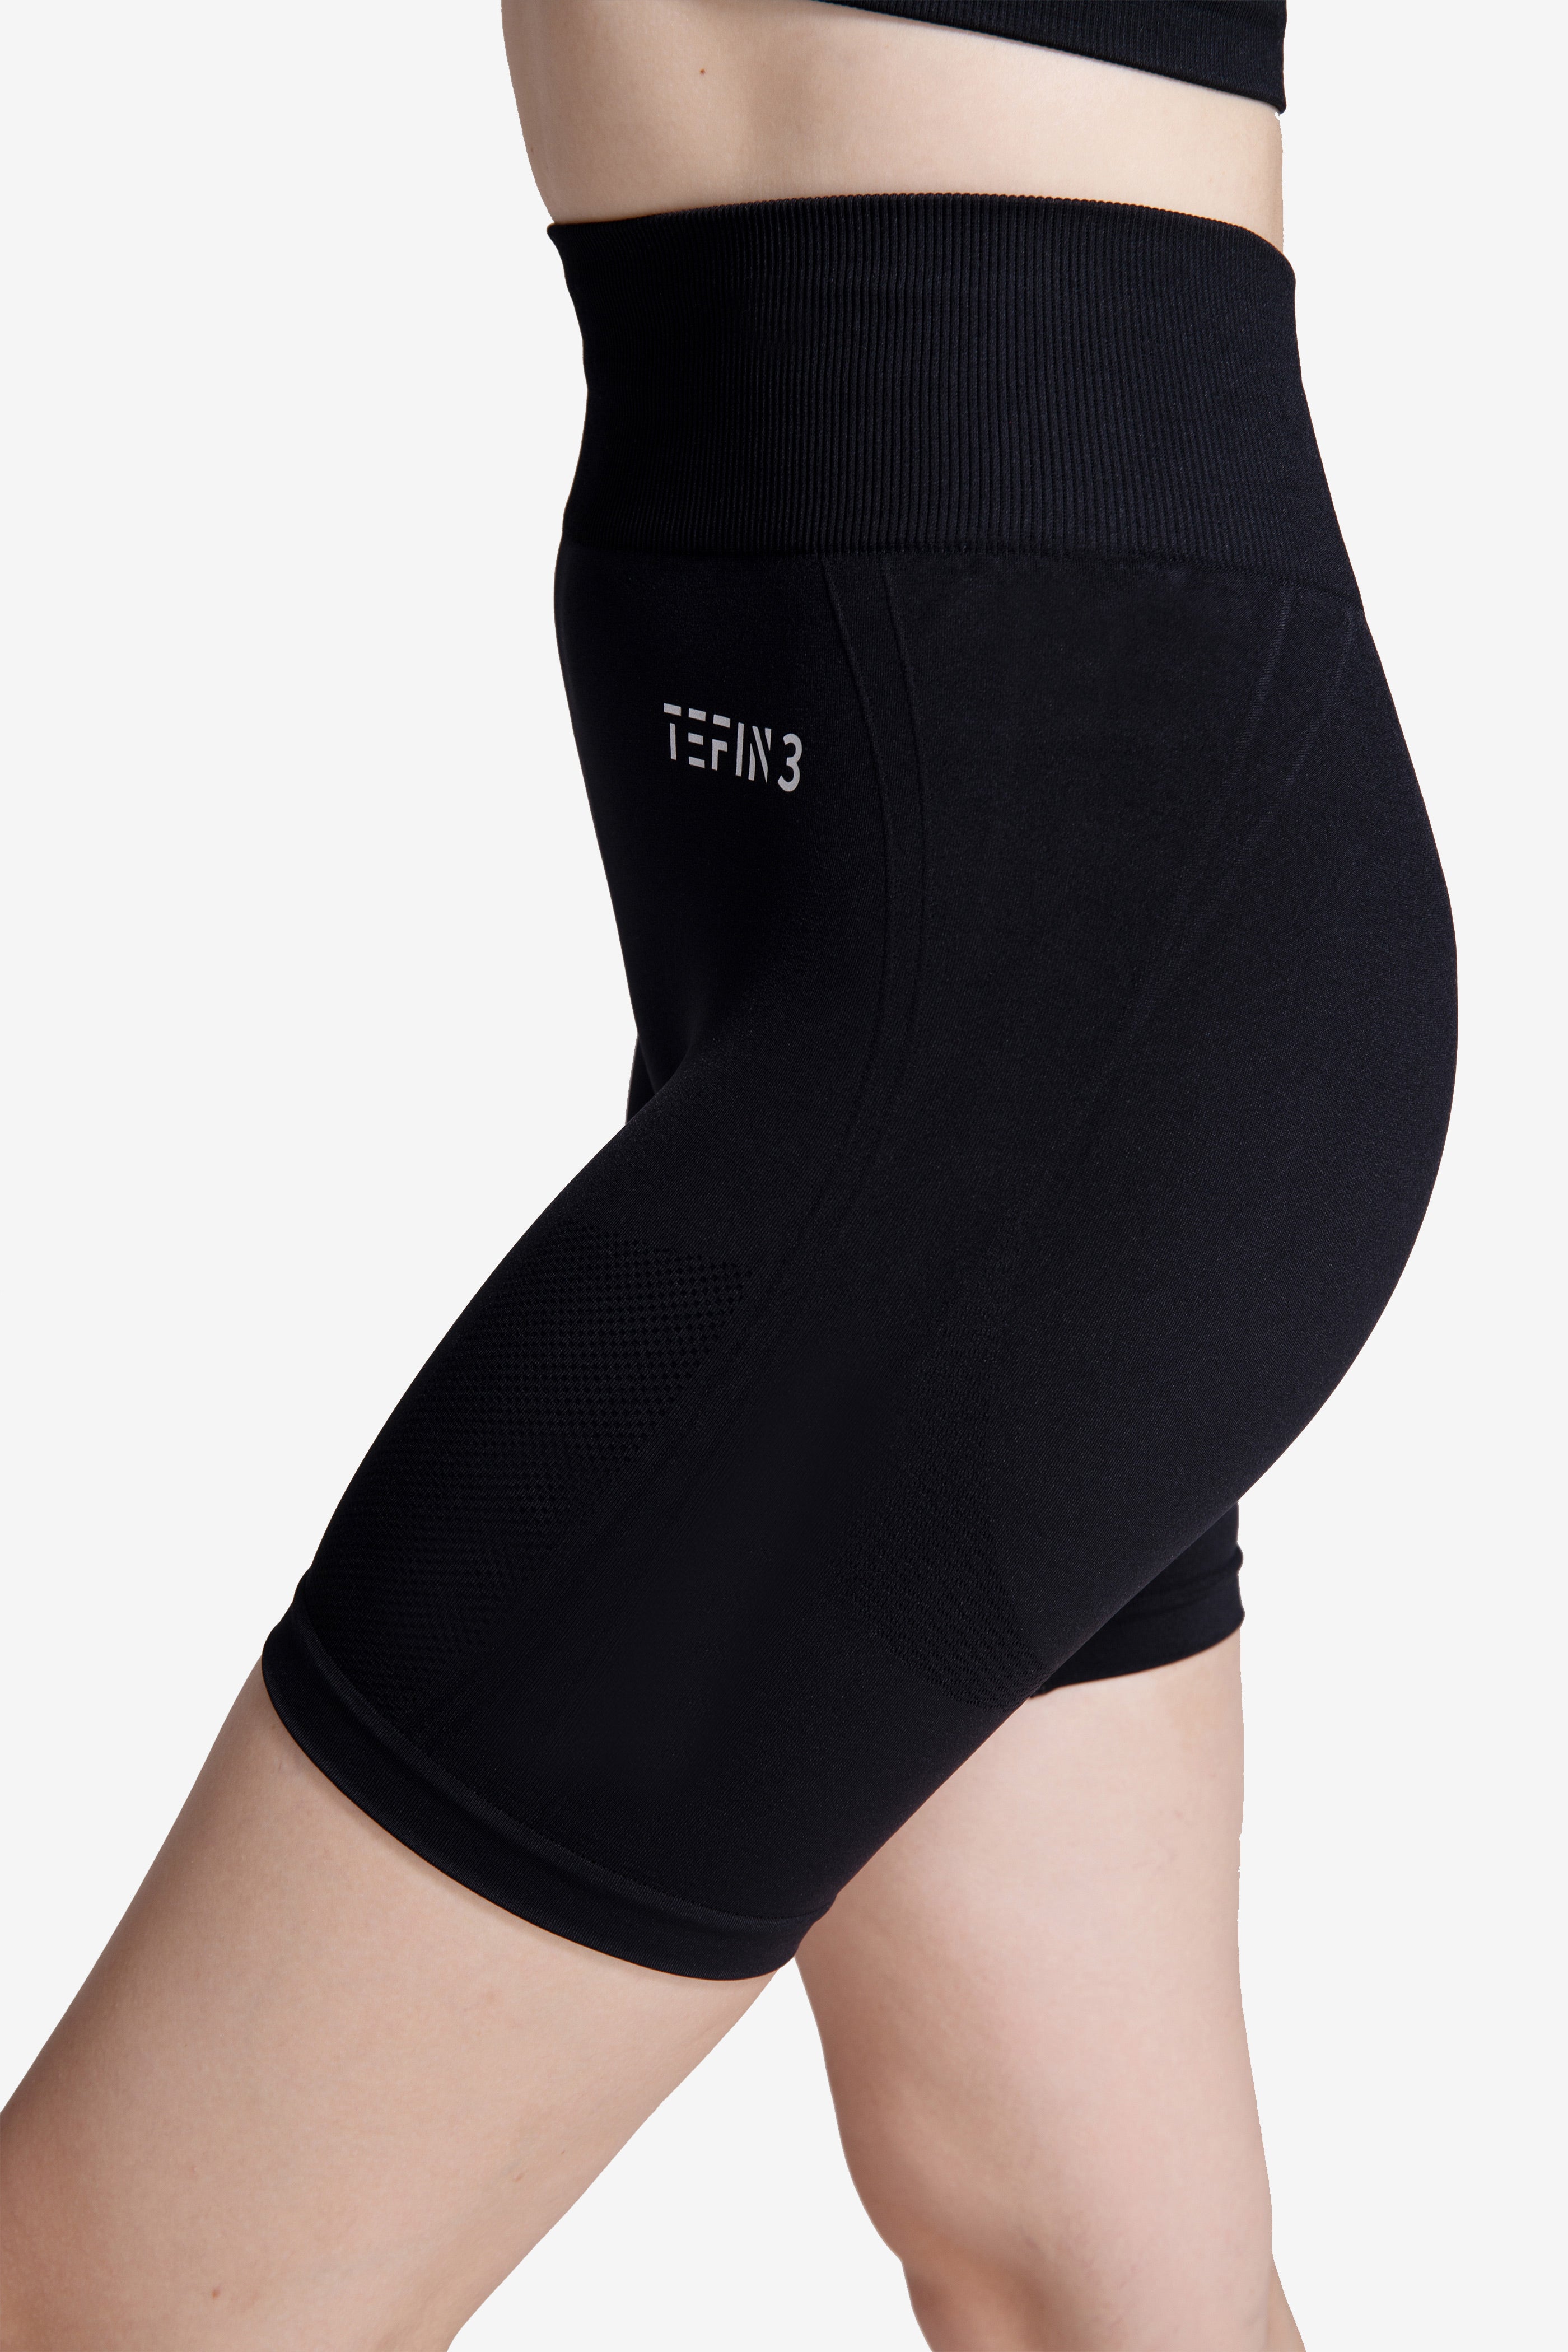 TEFIN3 Comfy Seamless Women Black Workout Shorts